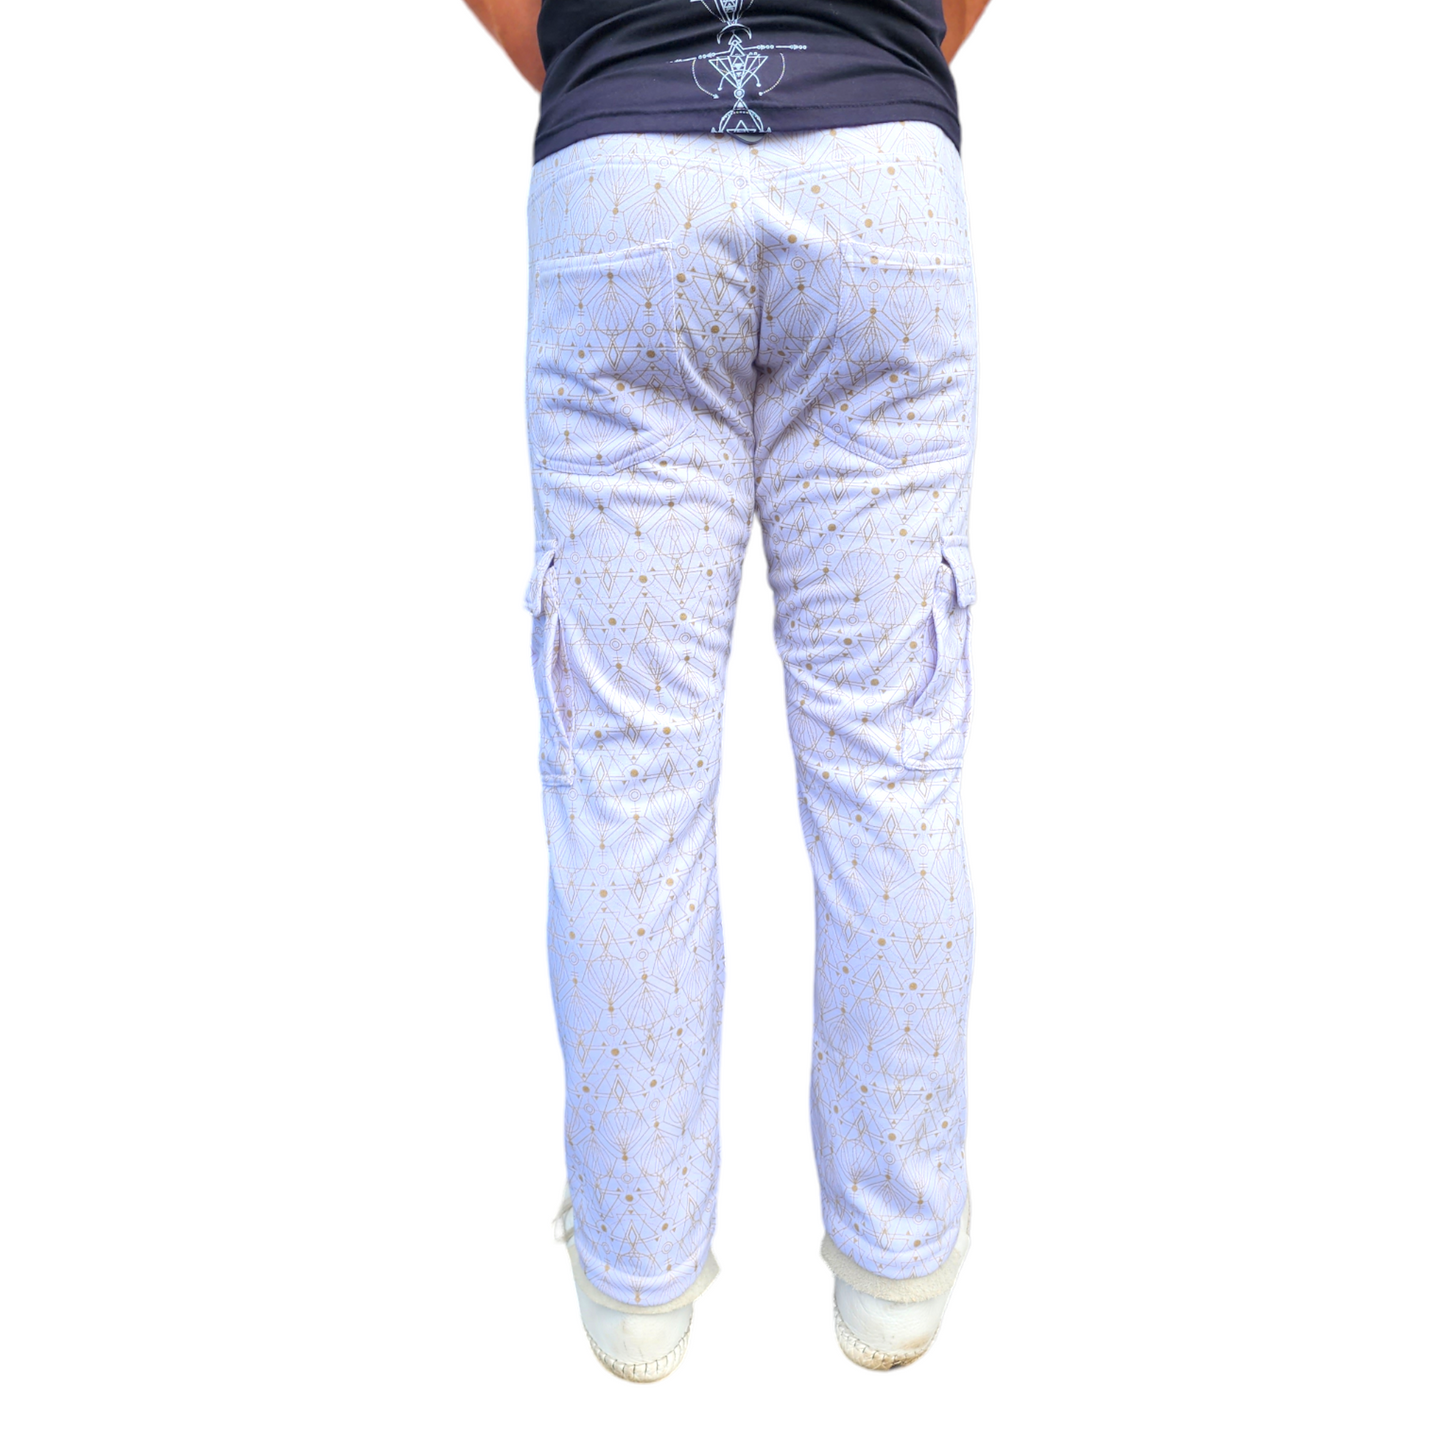 Men's Cargo pants with Nova print